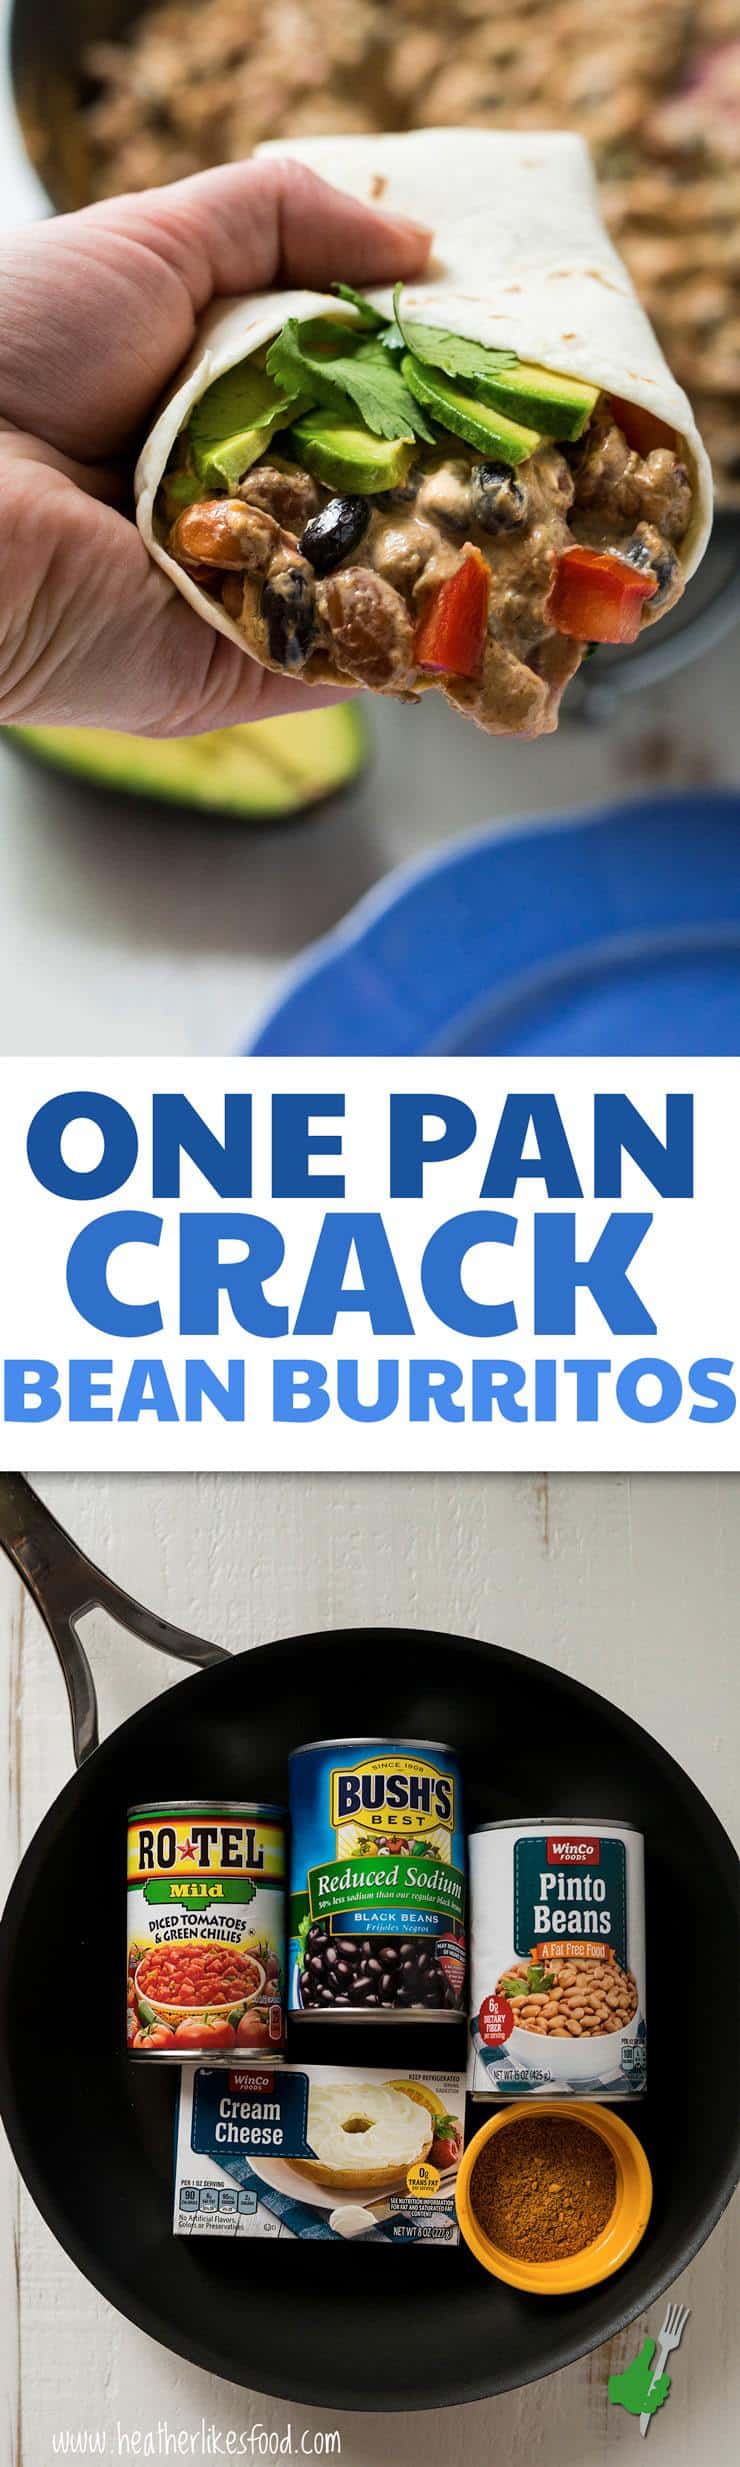 One Pan Crack Bean Burritos